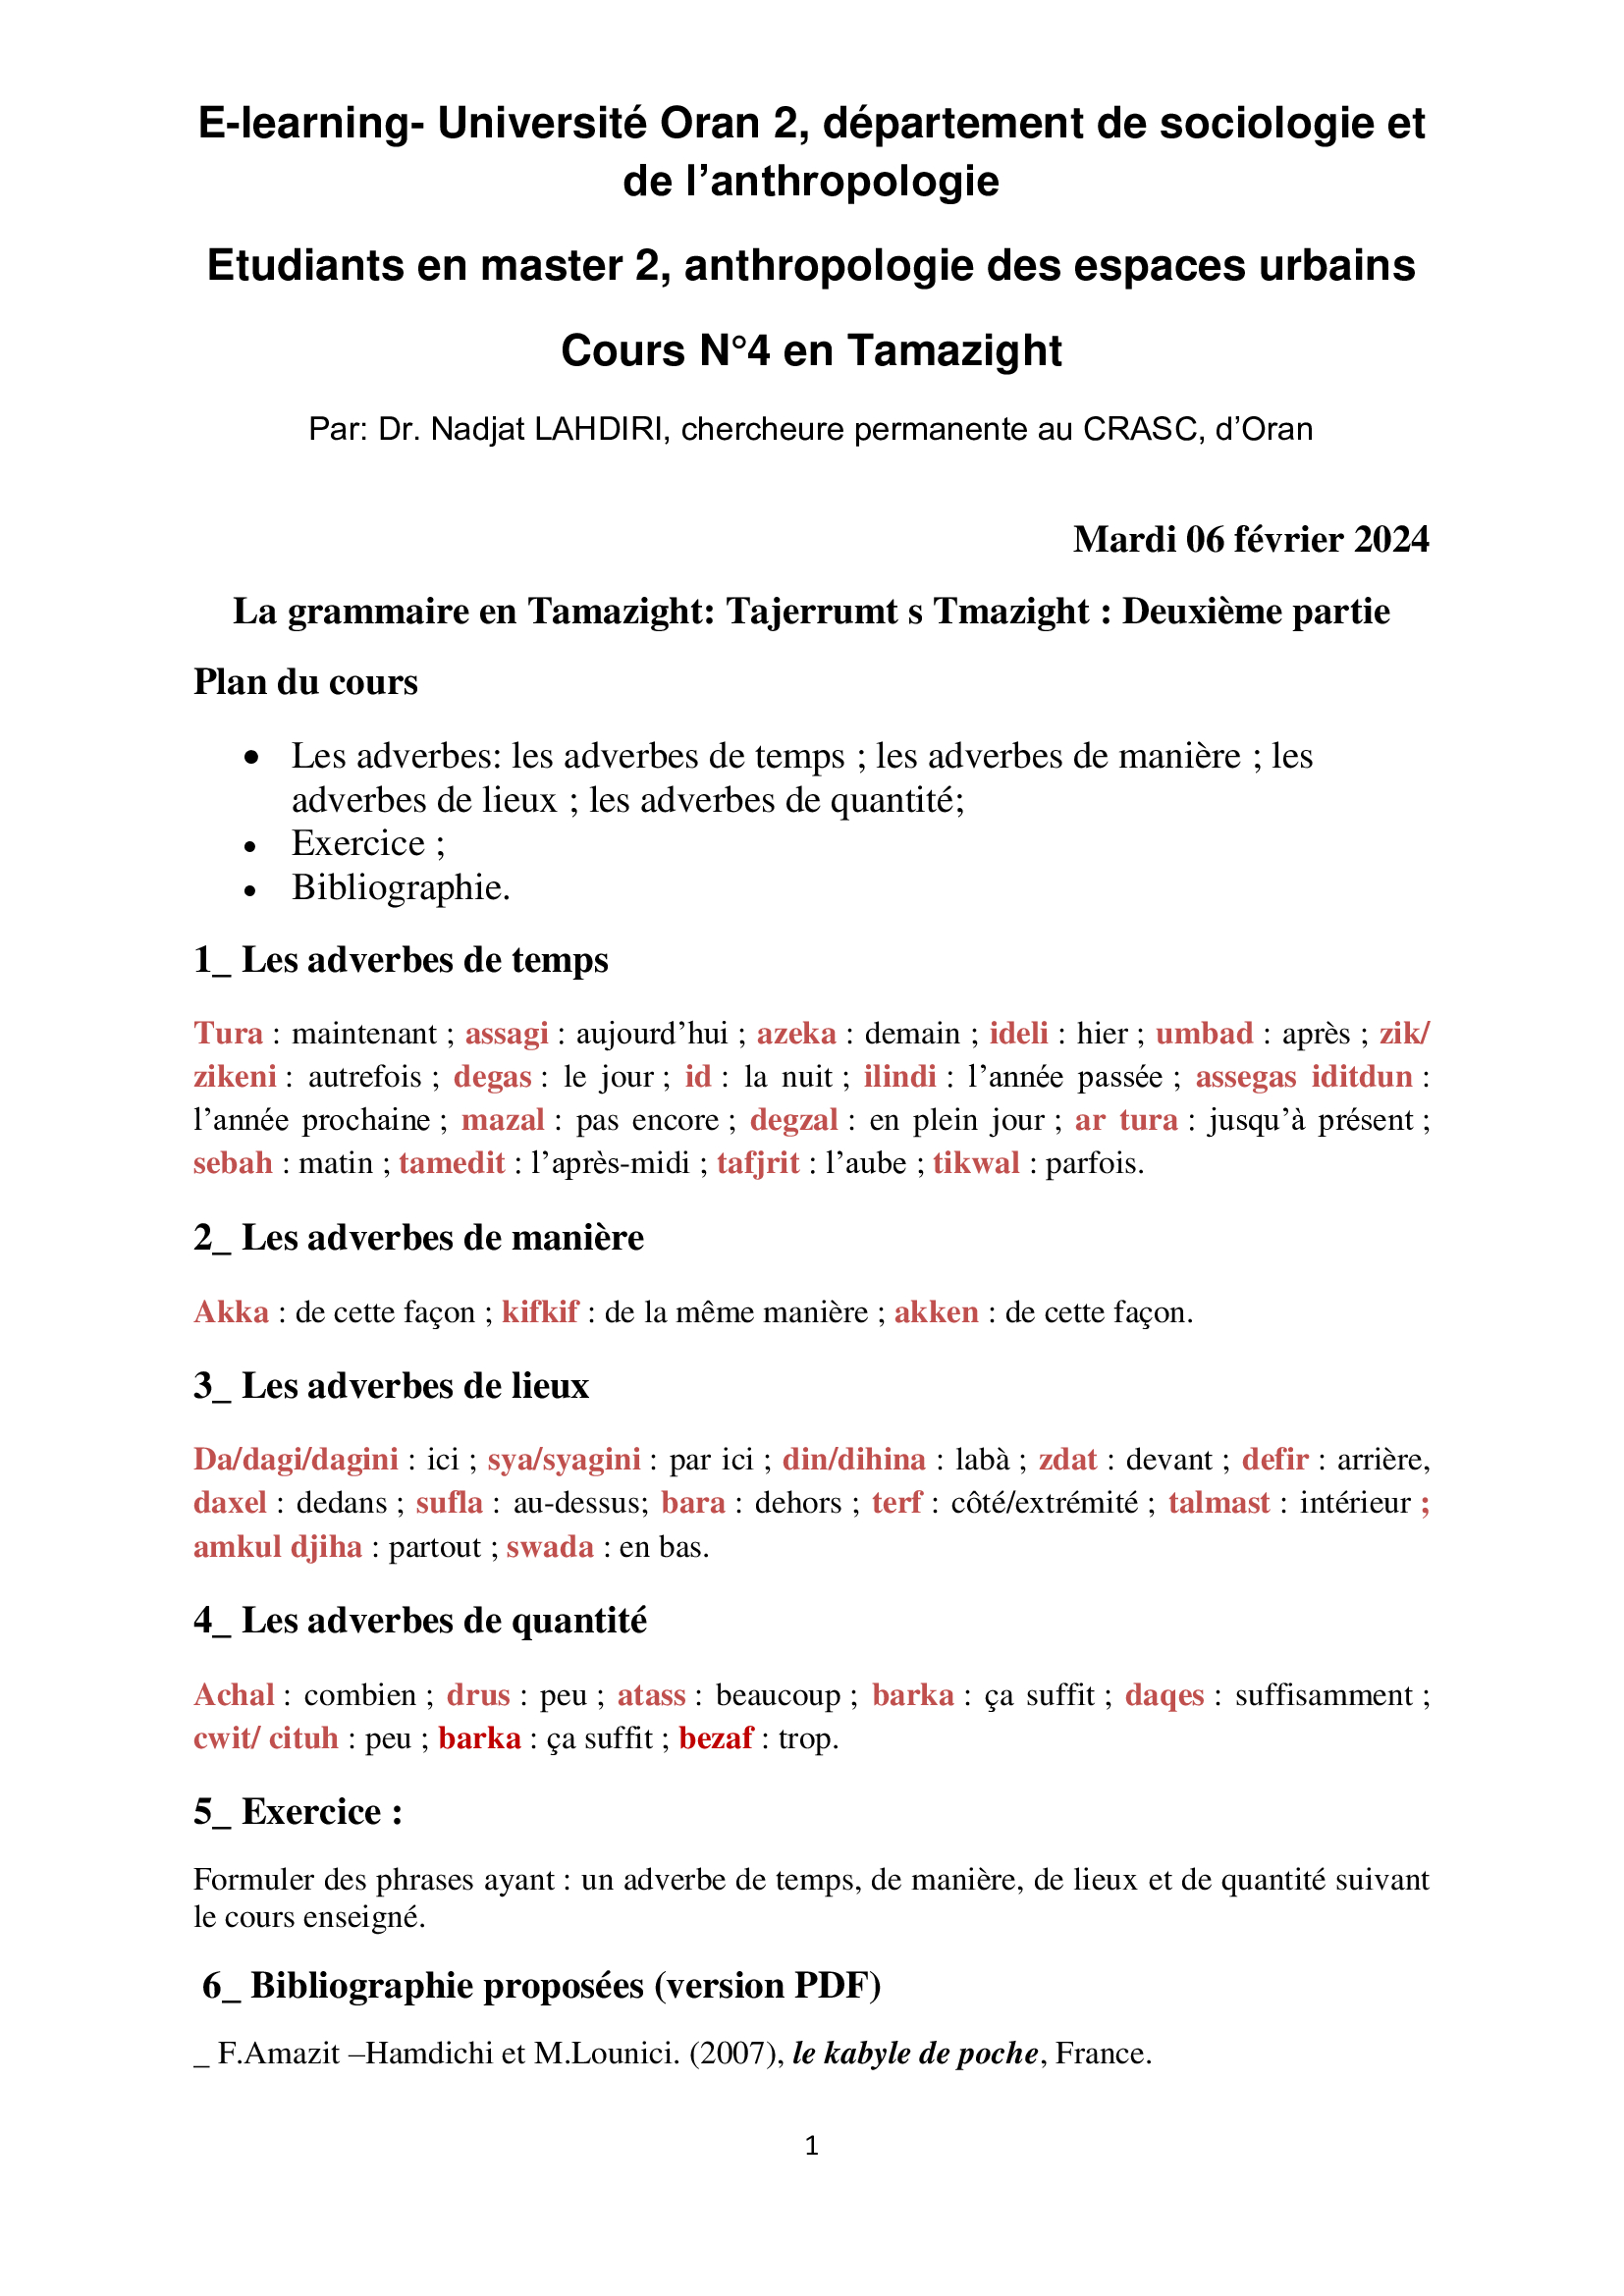 La grammaire en Tamazight: Partie 2